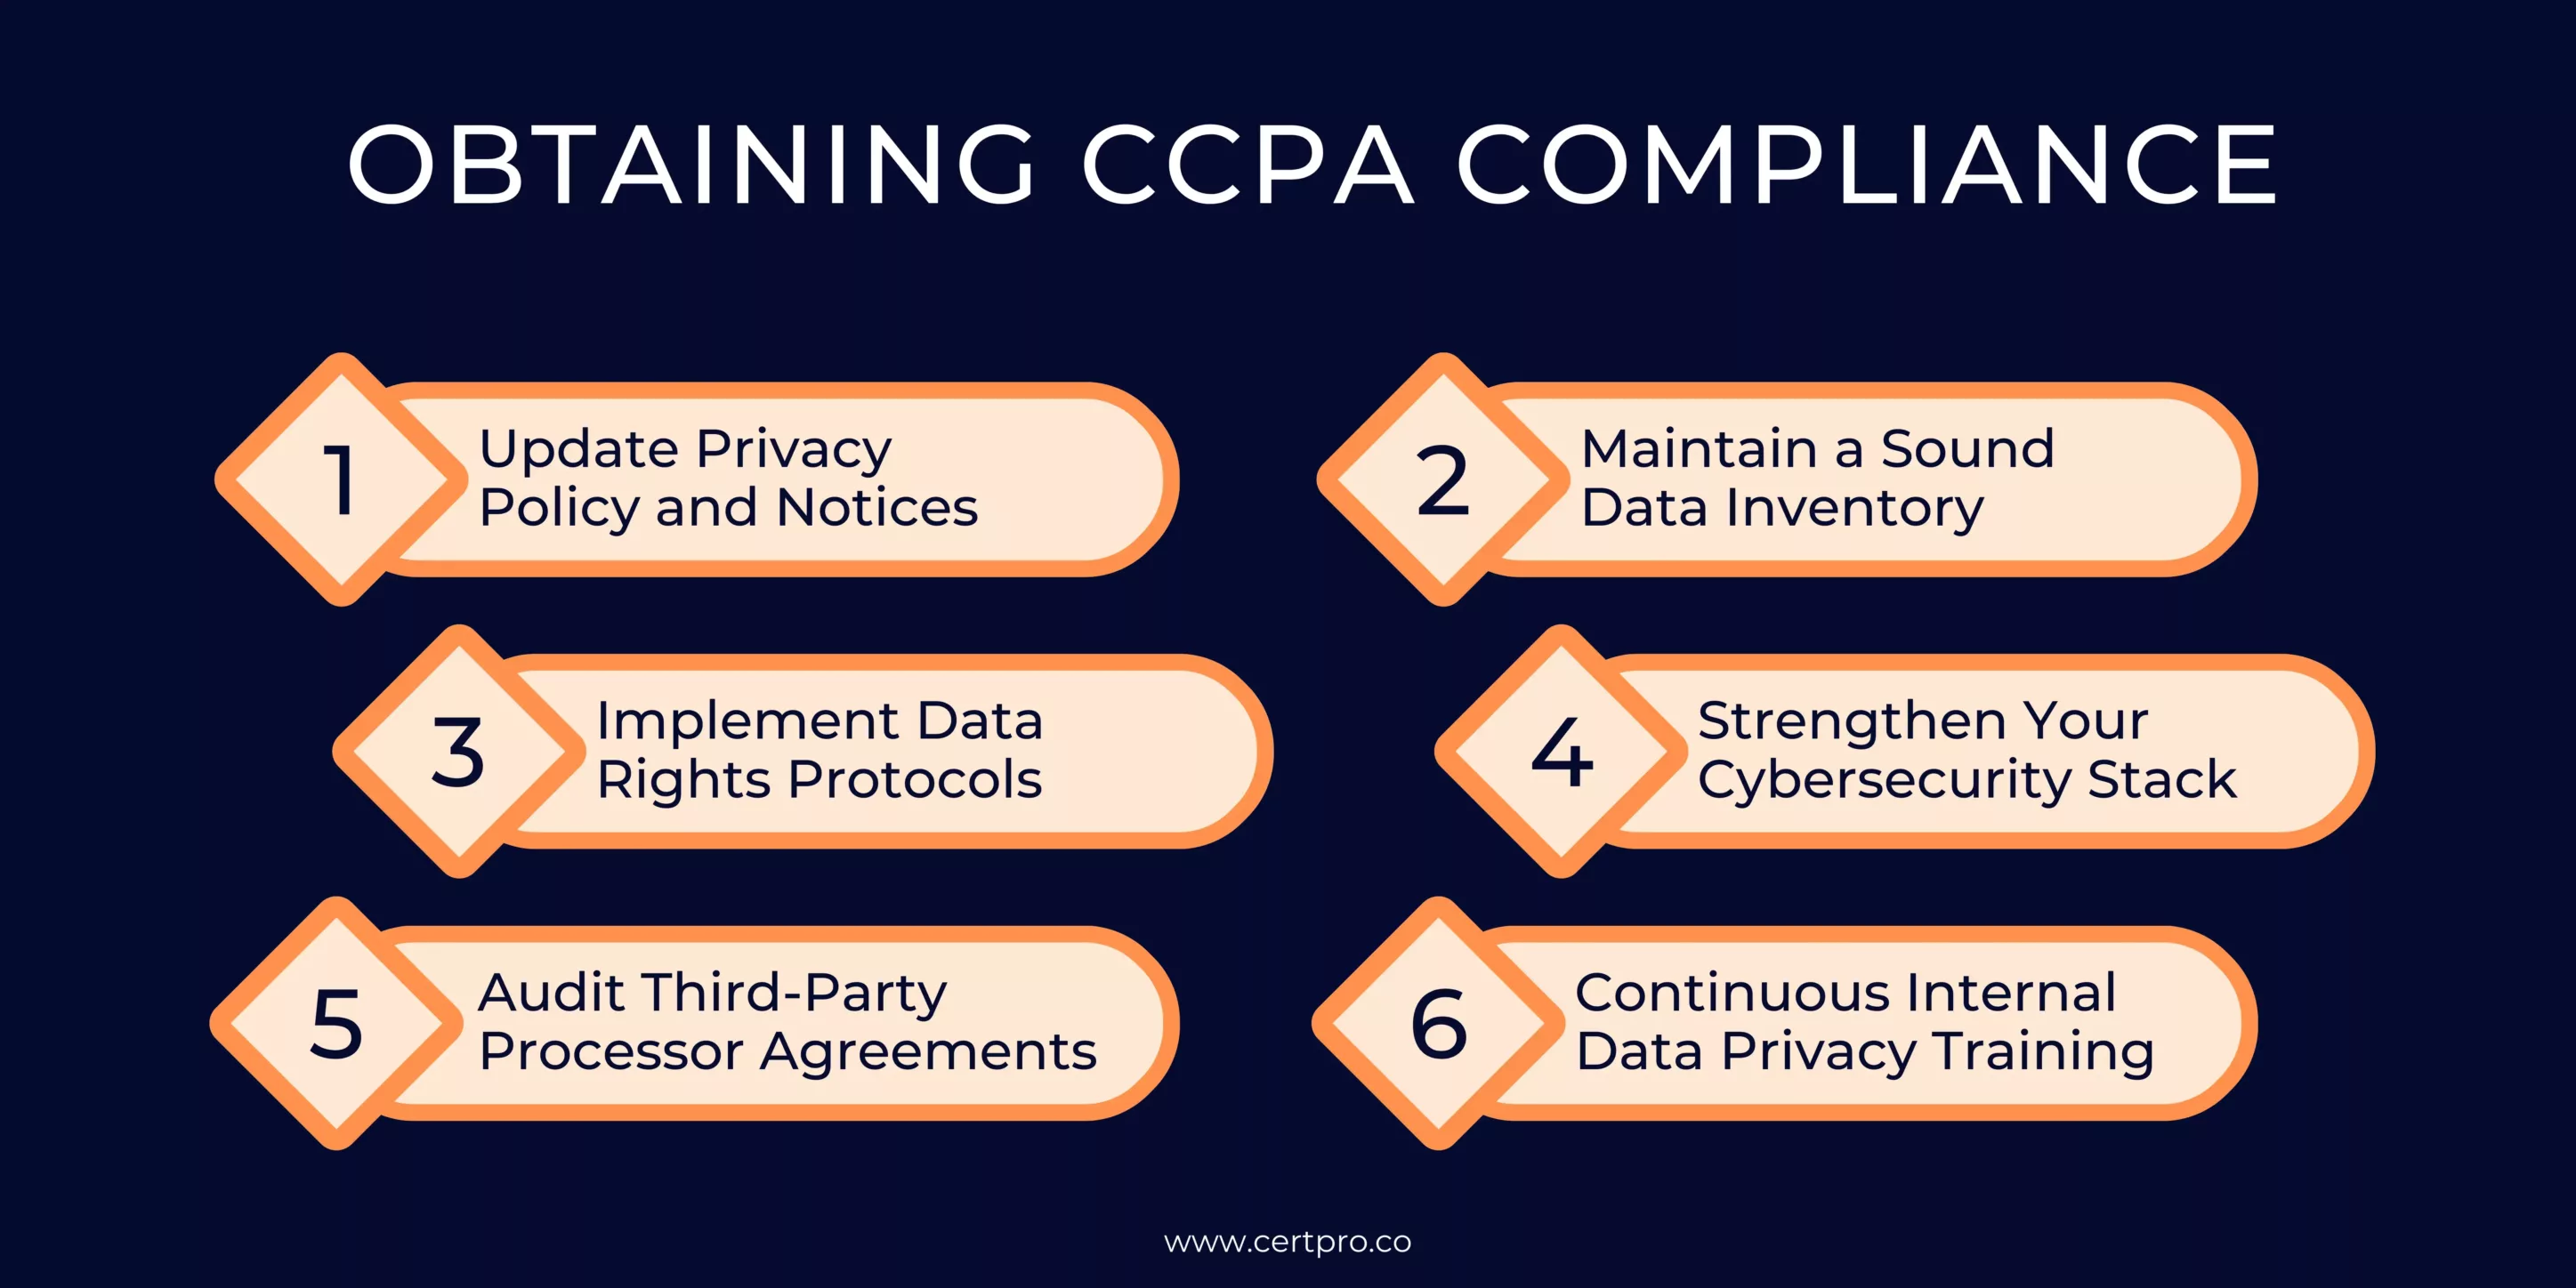 OBTAINING CCPA COMPLIANCE